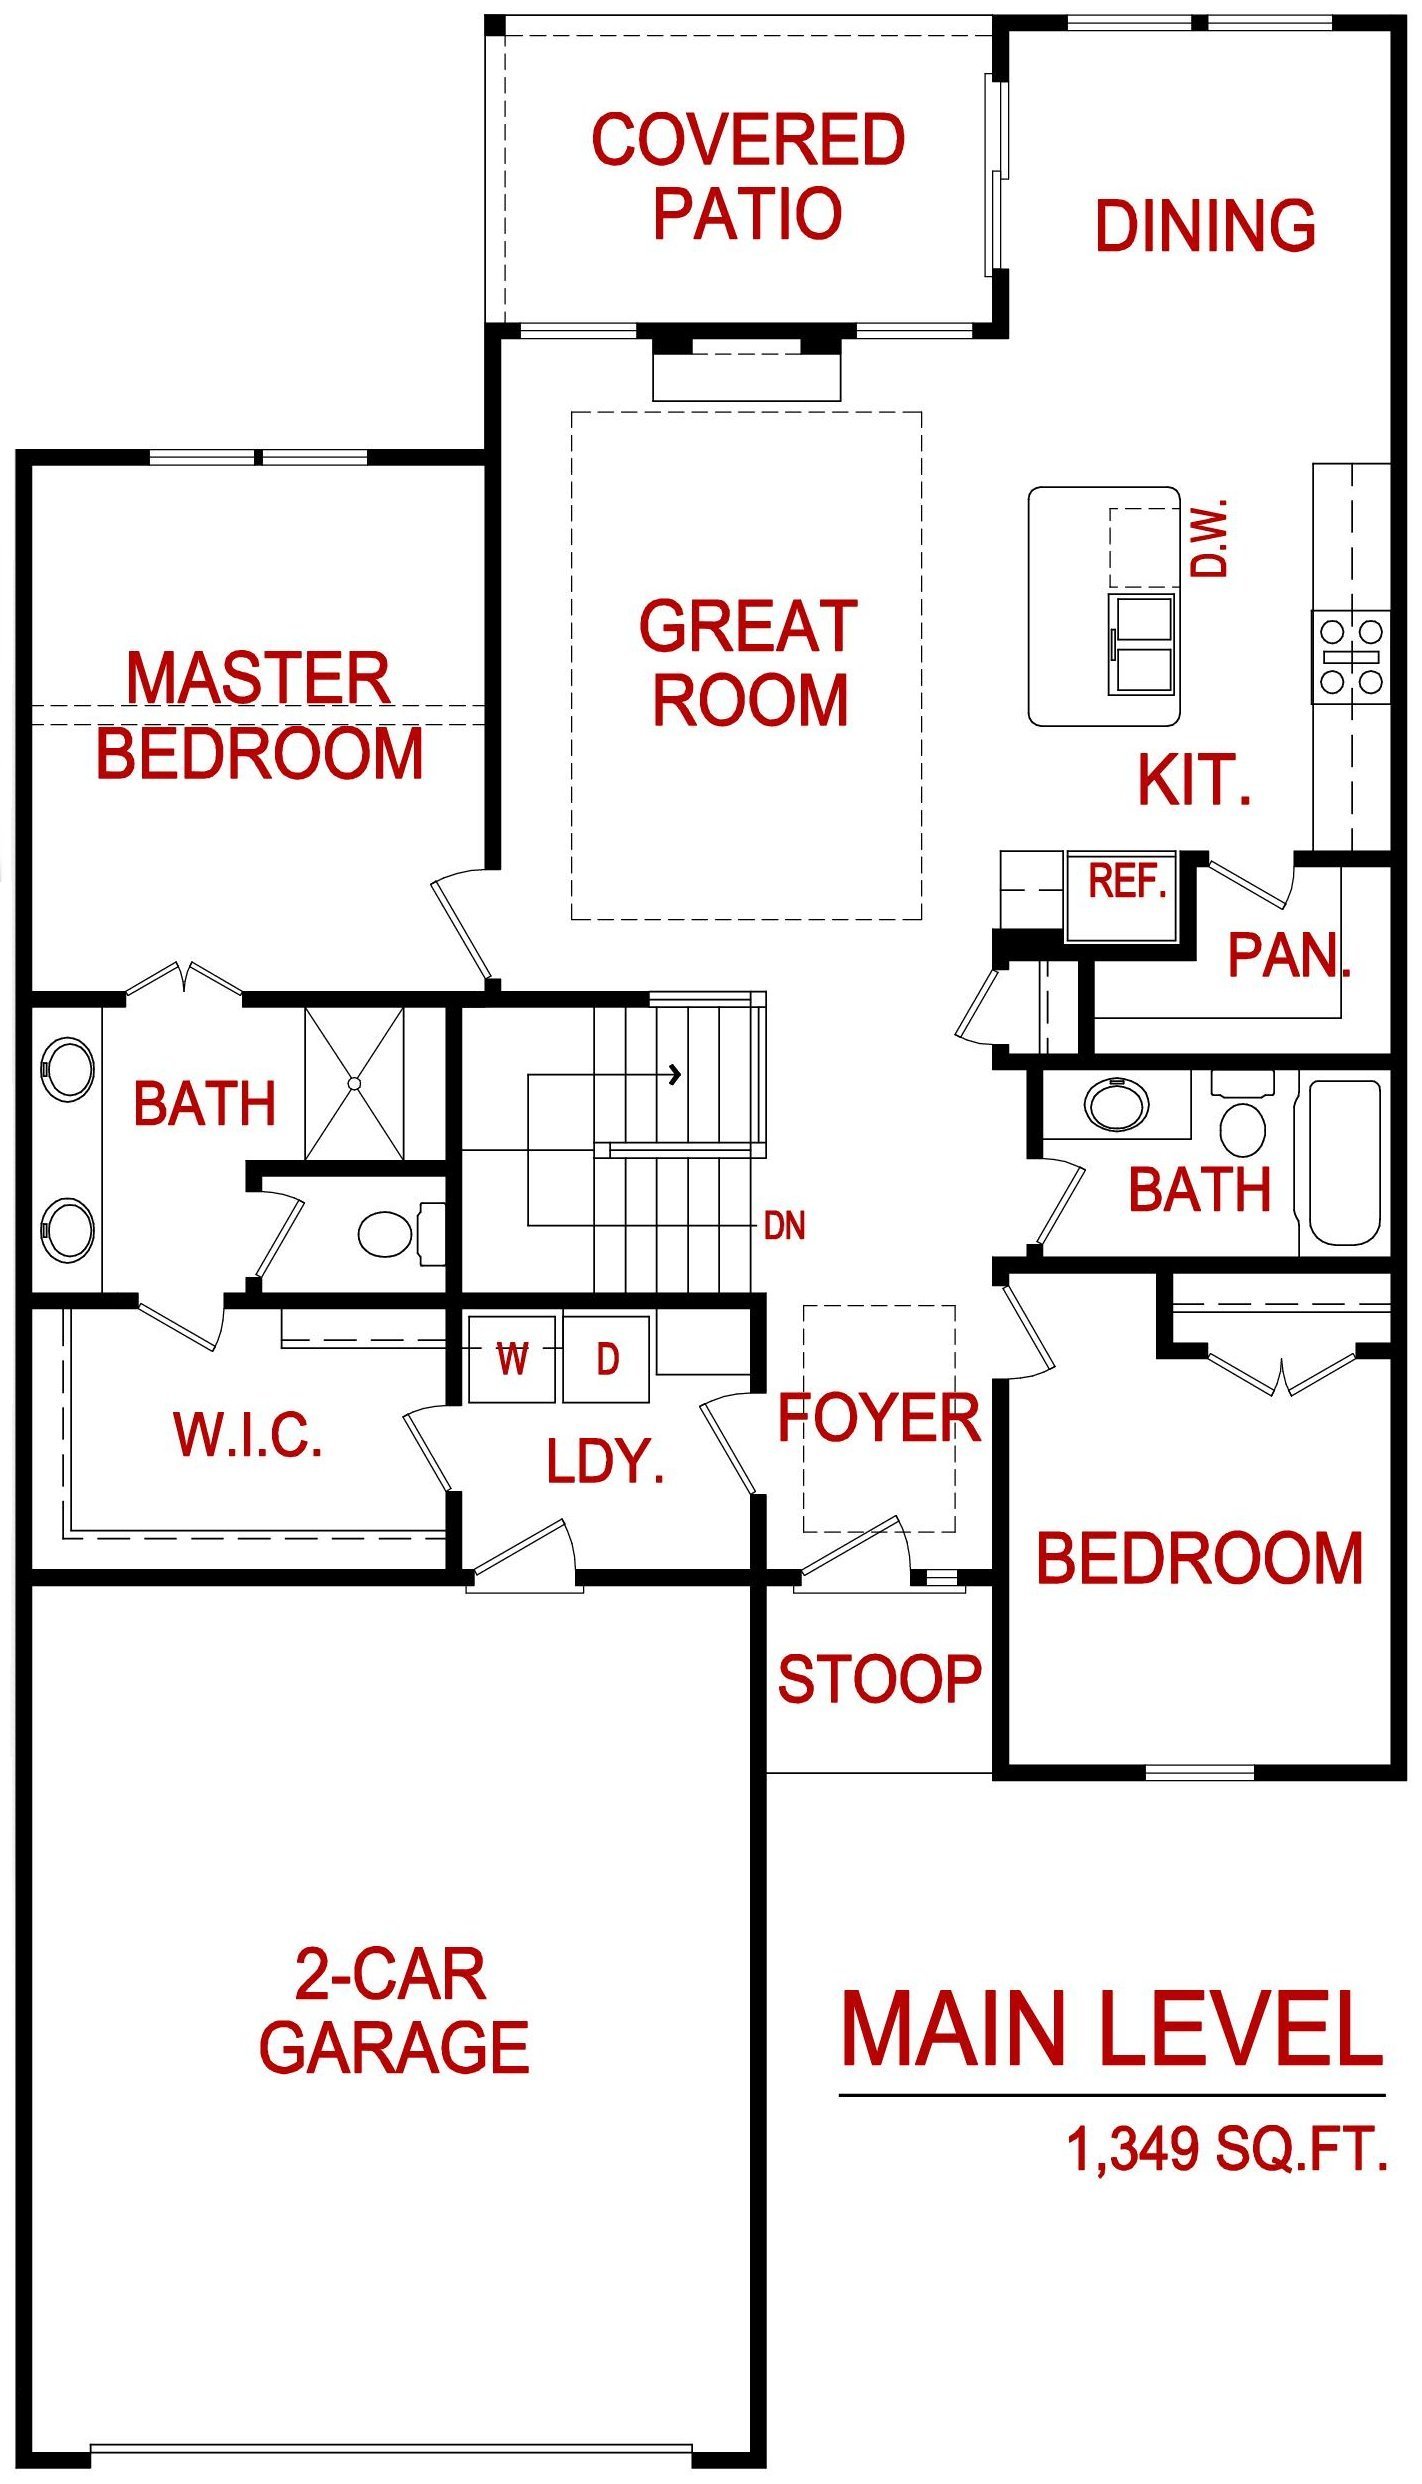 Floor plan for 9538 Shady Bend Rd., Lenexa, KS from lambie homes